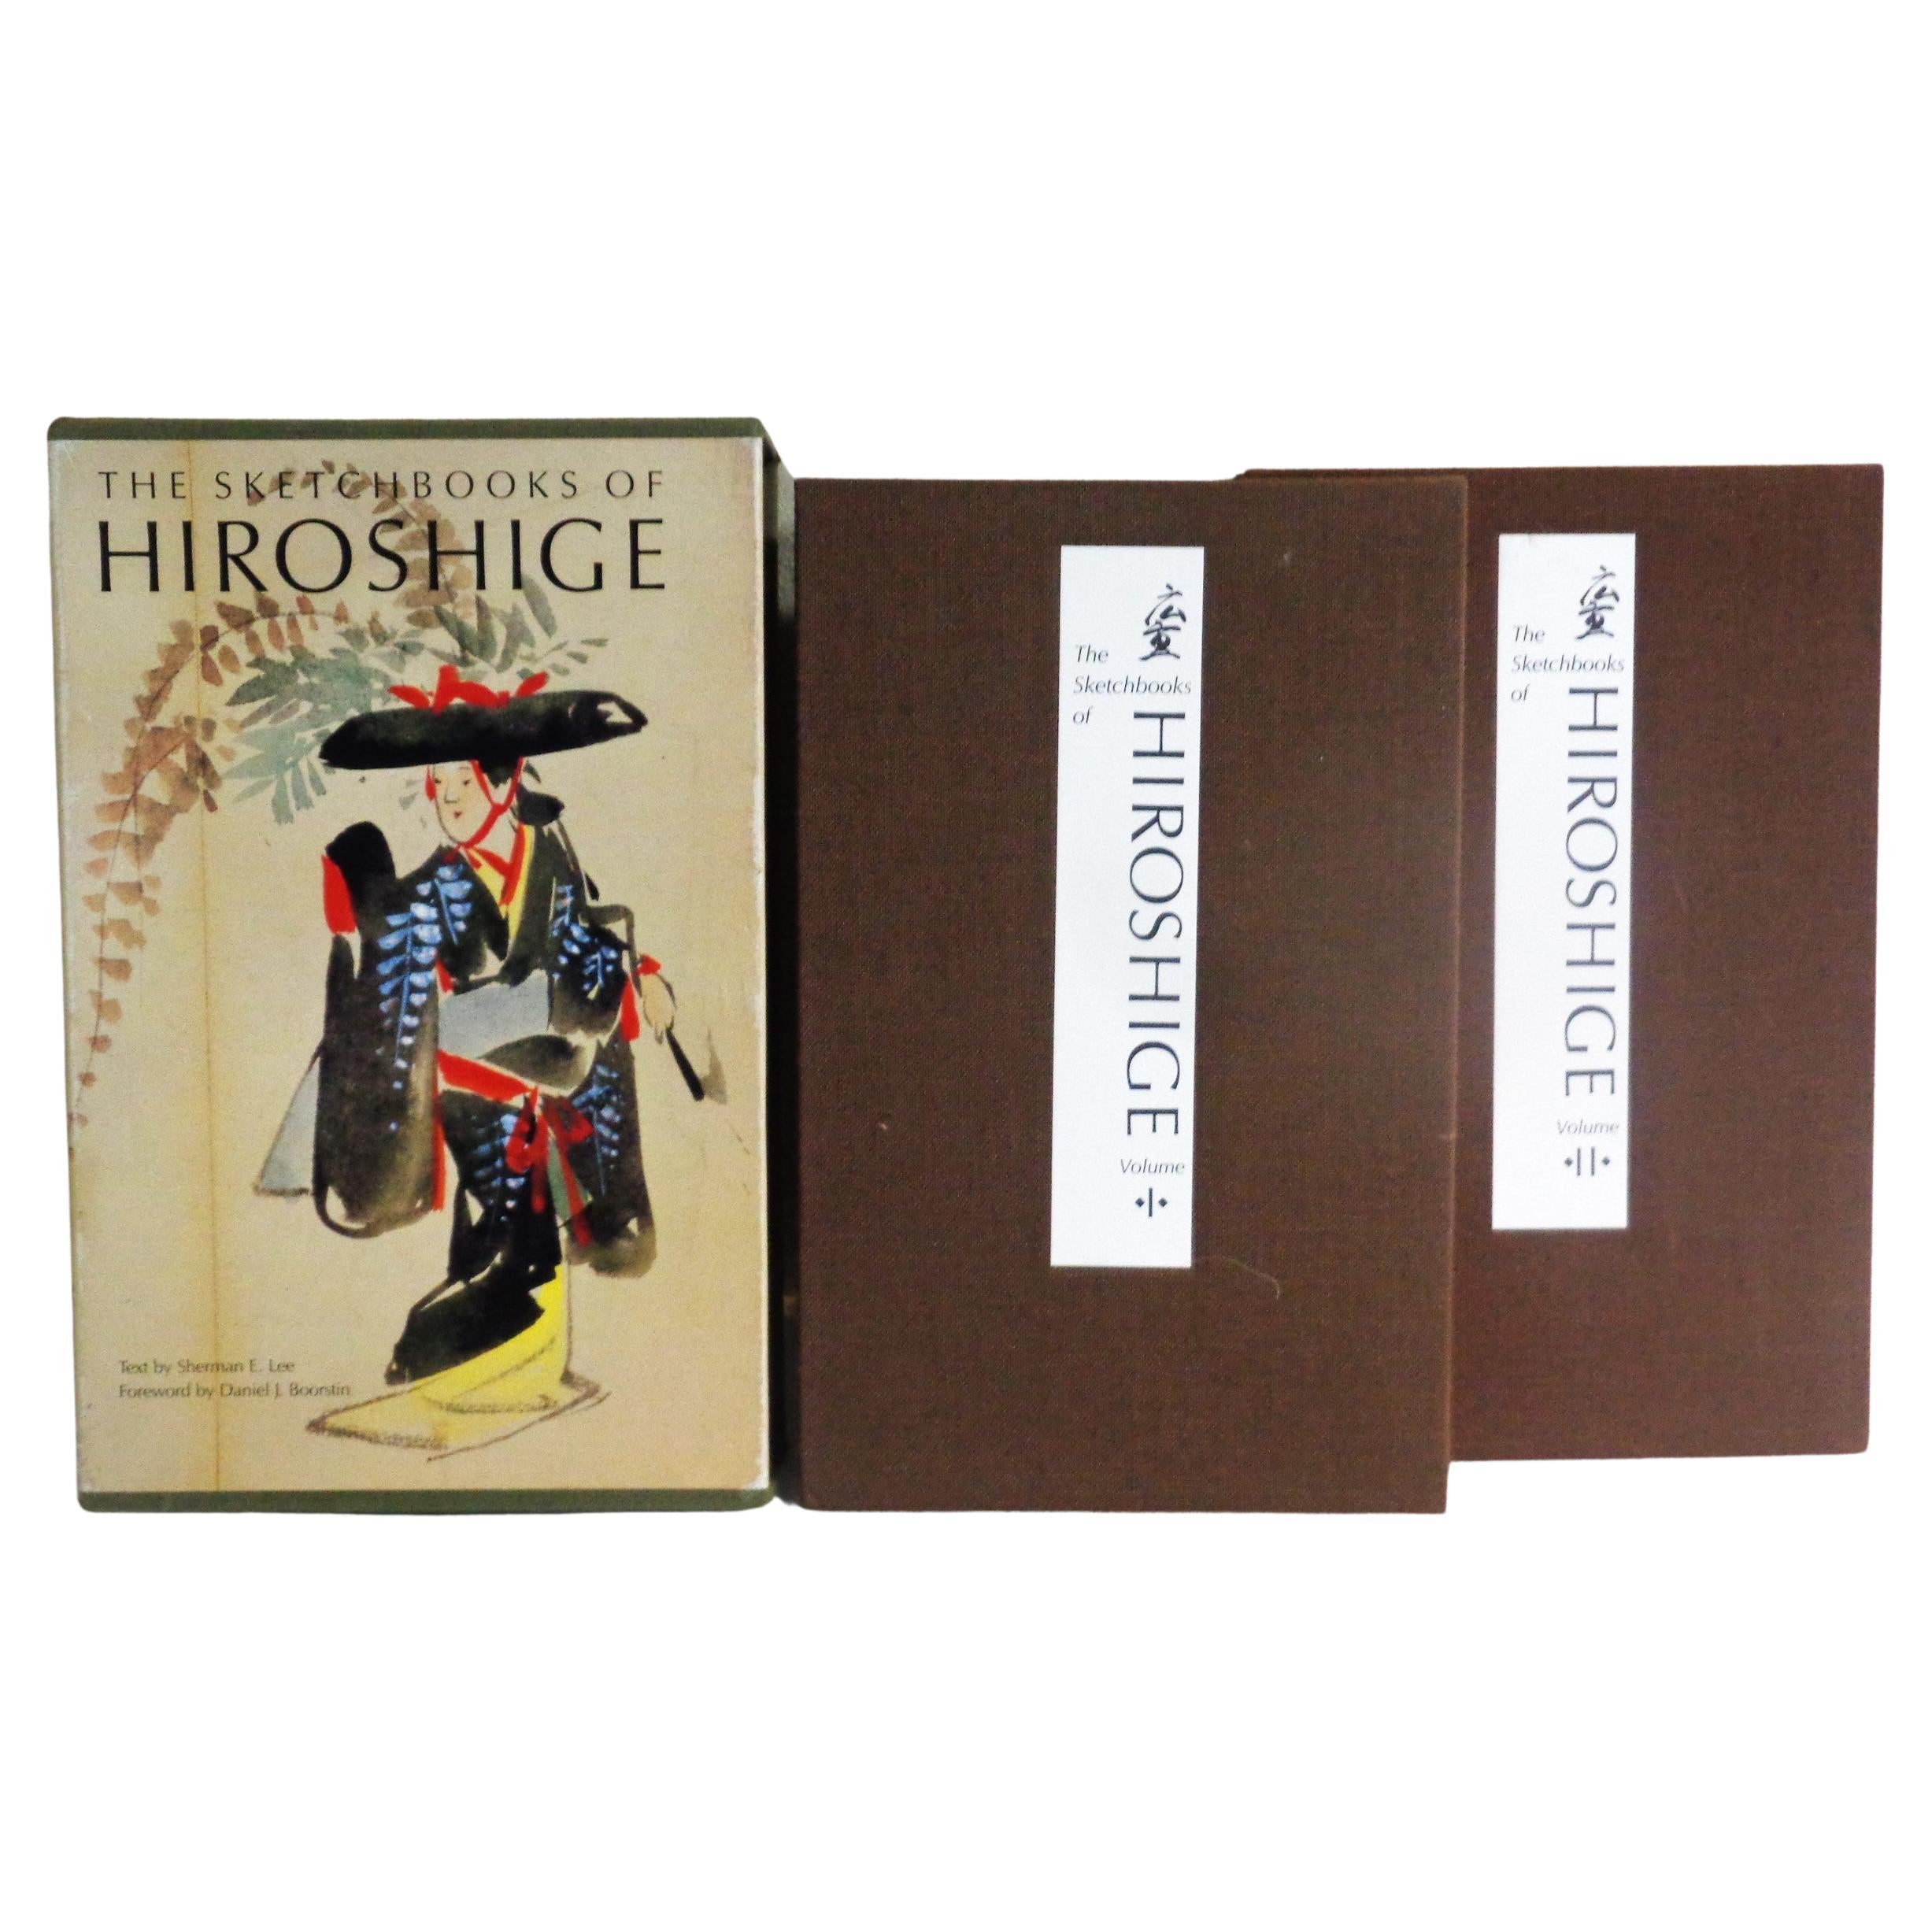 The Sketchbooks of Hiroshige, 1984 George Braziller - 1st Edition